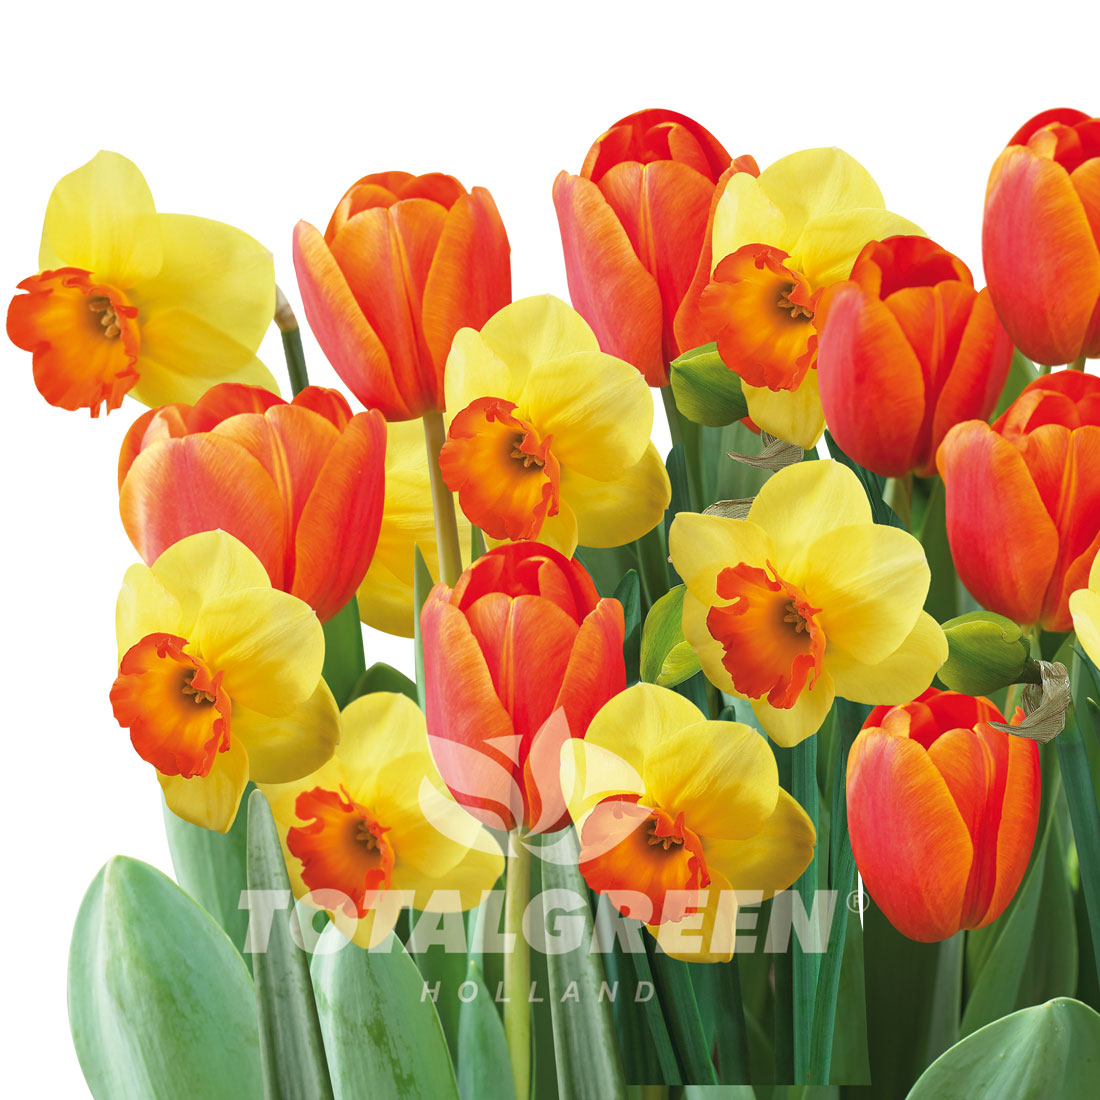 TOTALGREEN Bulbes de tulipe Total Green Holland(MD), couleurs variées  72736000-5